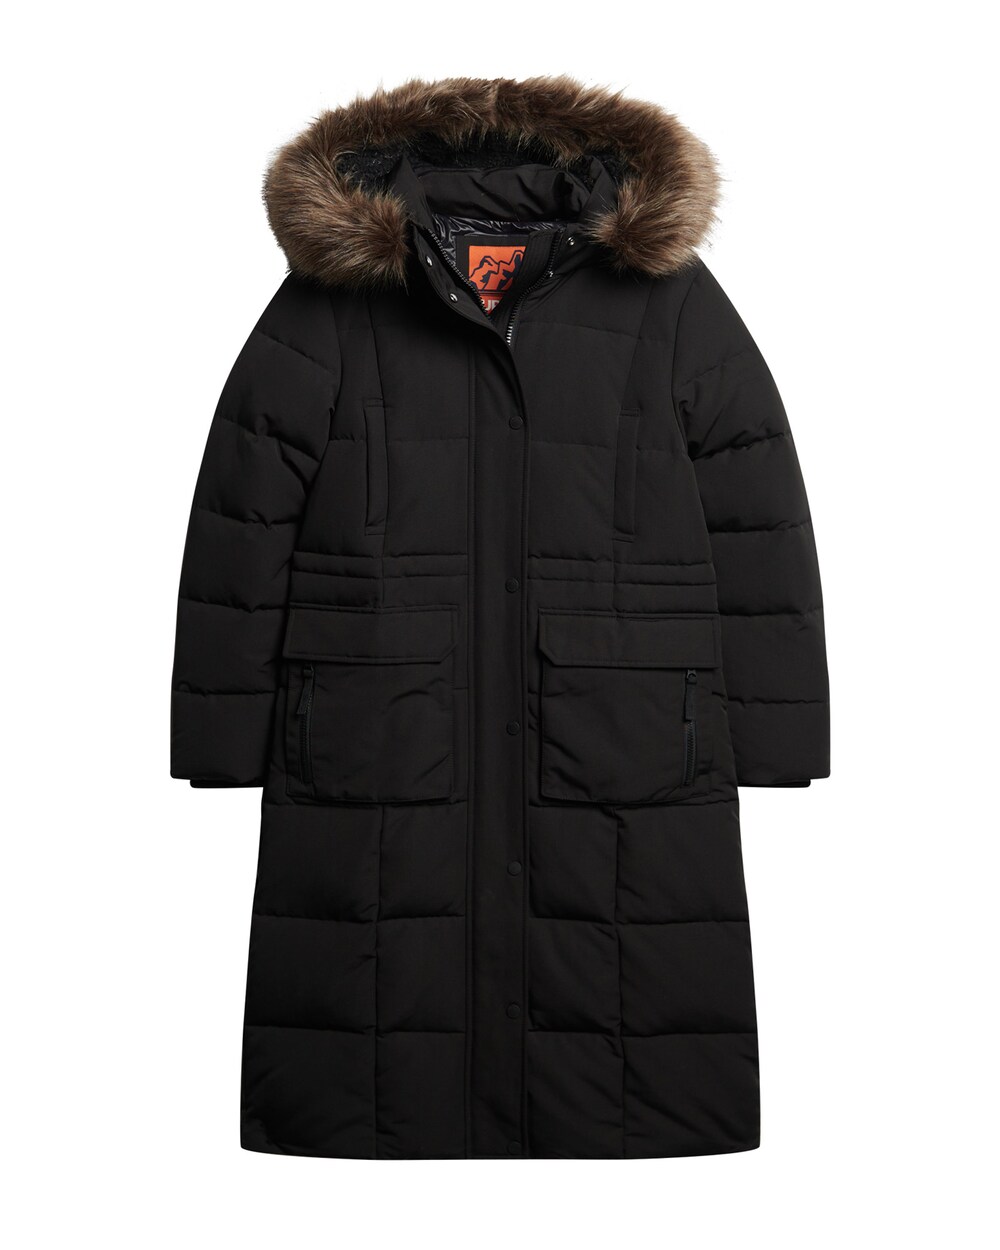 Зимнее пальто Superdry Everest, черный